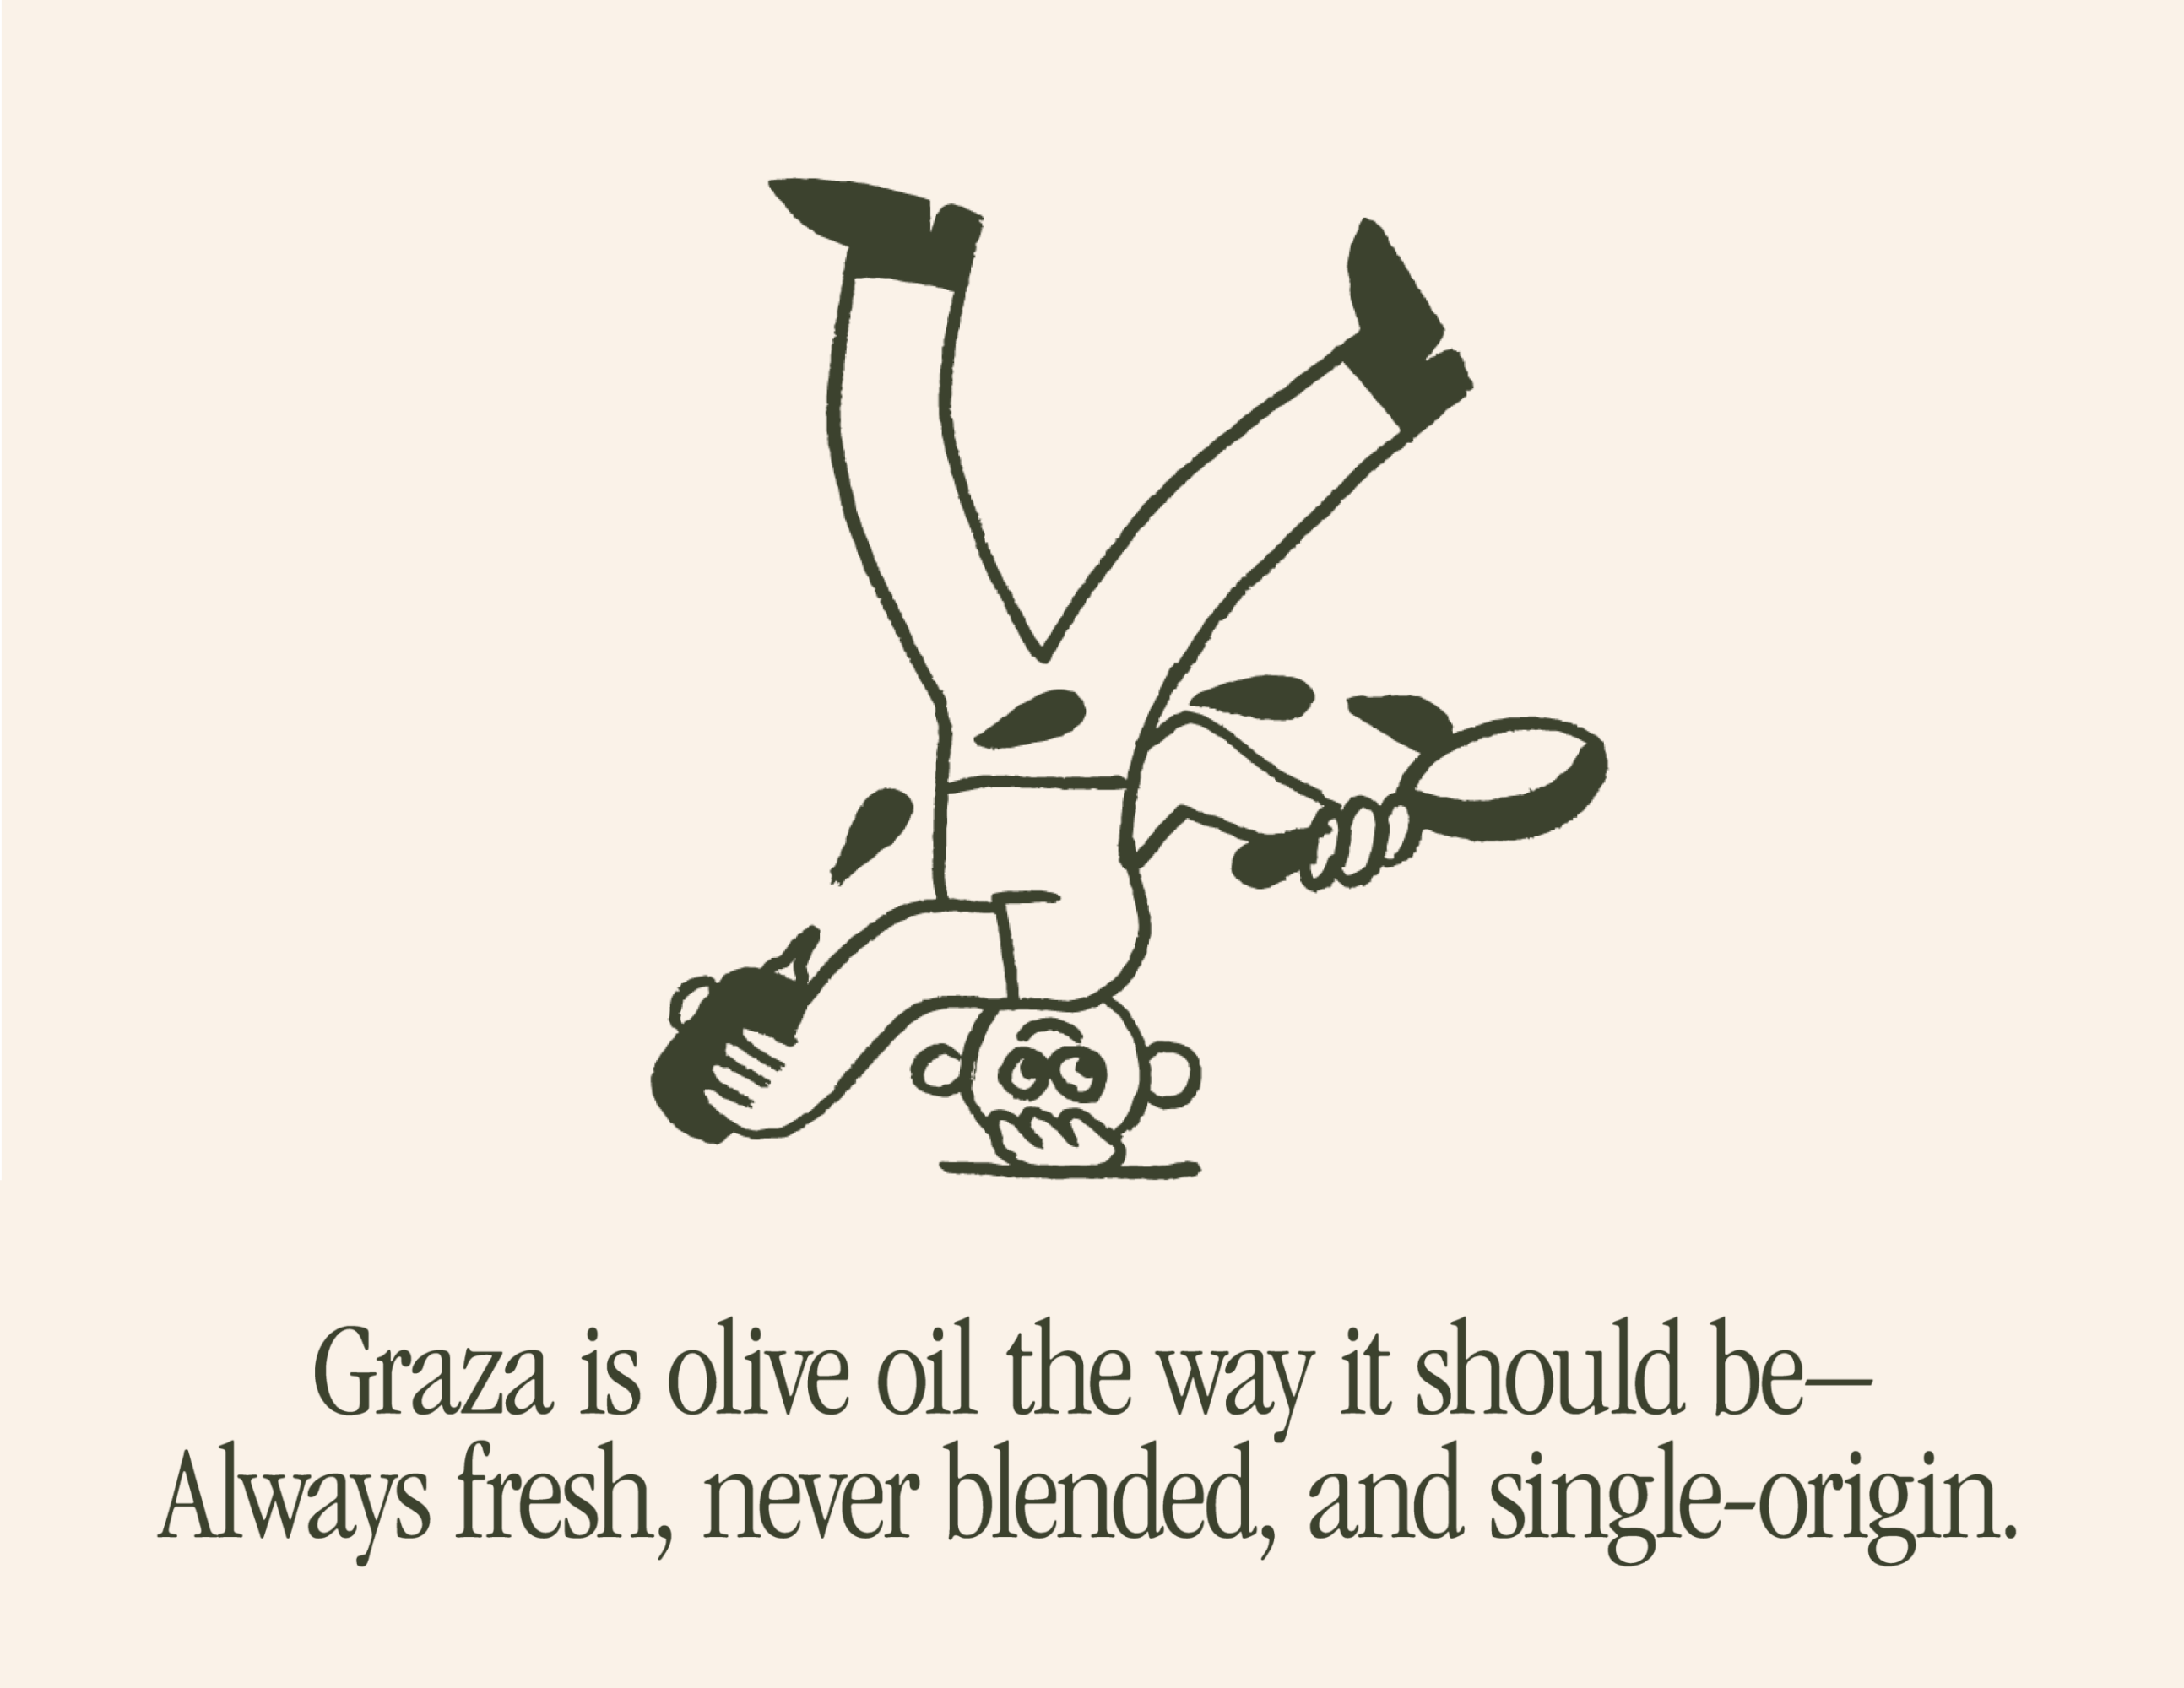 Illustration by Gander for squeezable single origin olive oil Graza